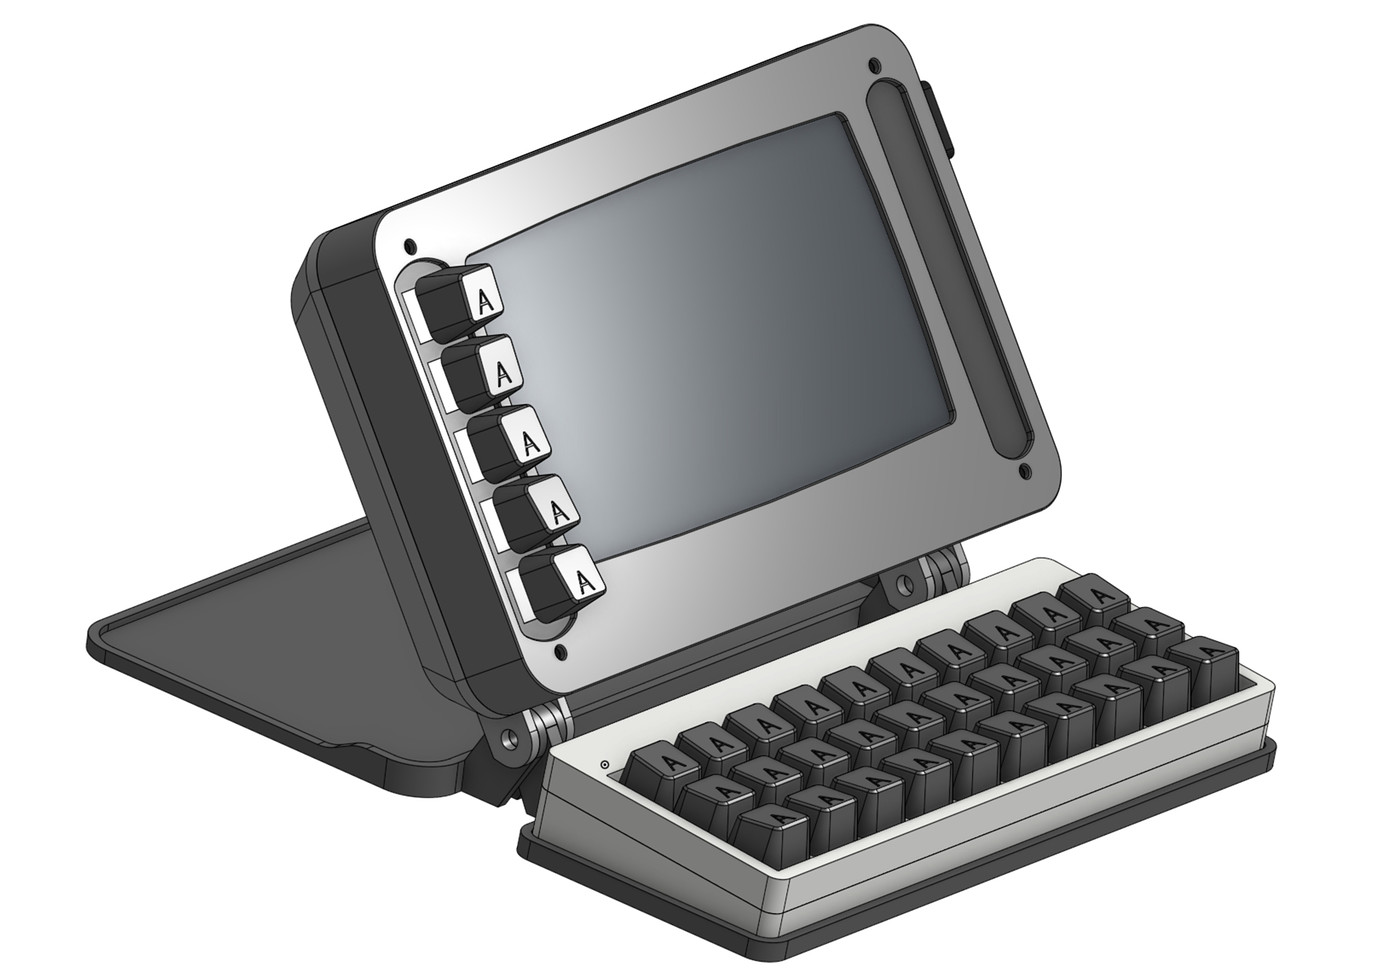 X 10 3 64. Тполт-10. PDP-10 клавиатура. Trimble t10x Tablet жесткий диск. Saibot KX-10 клавиатура.